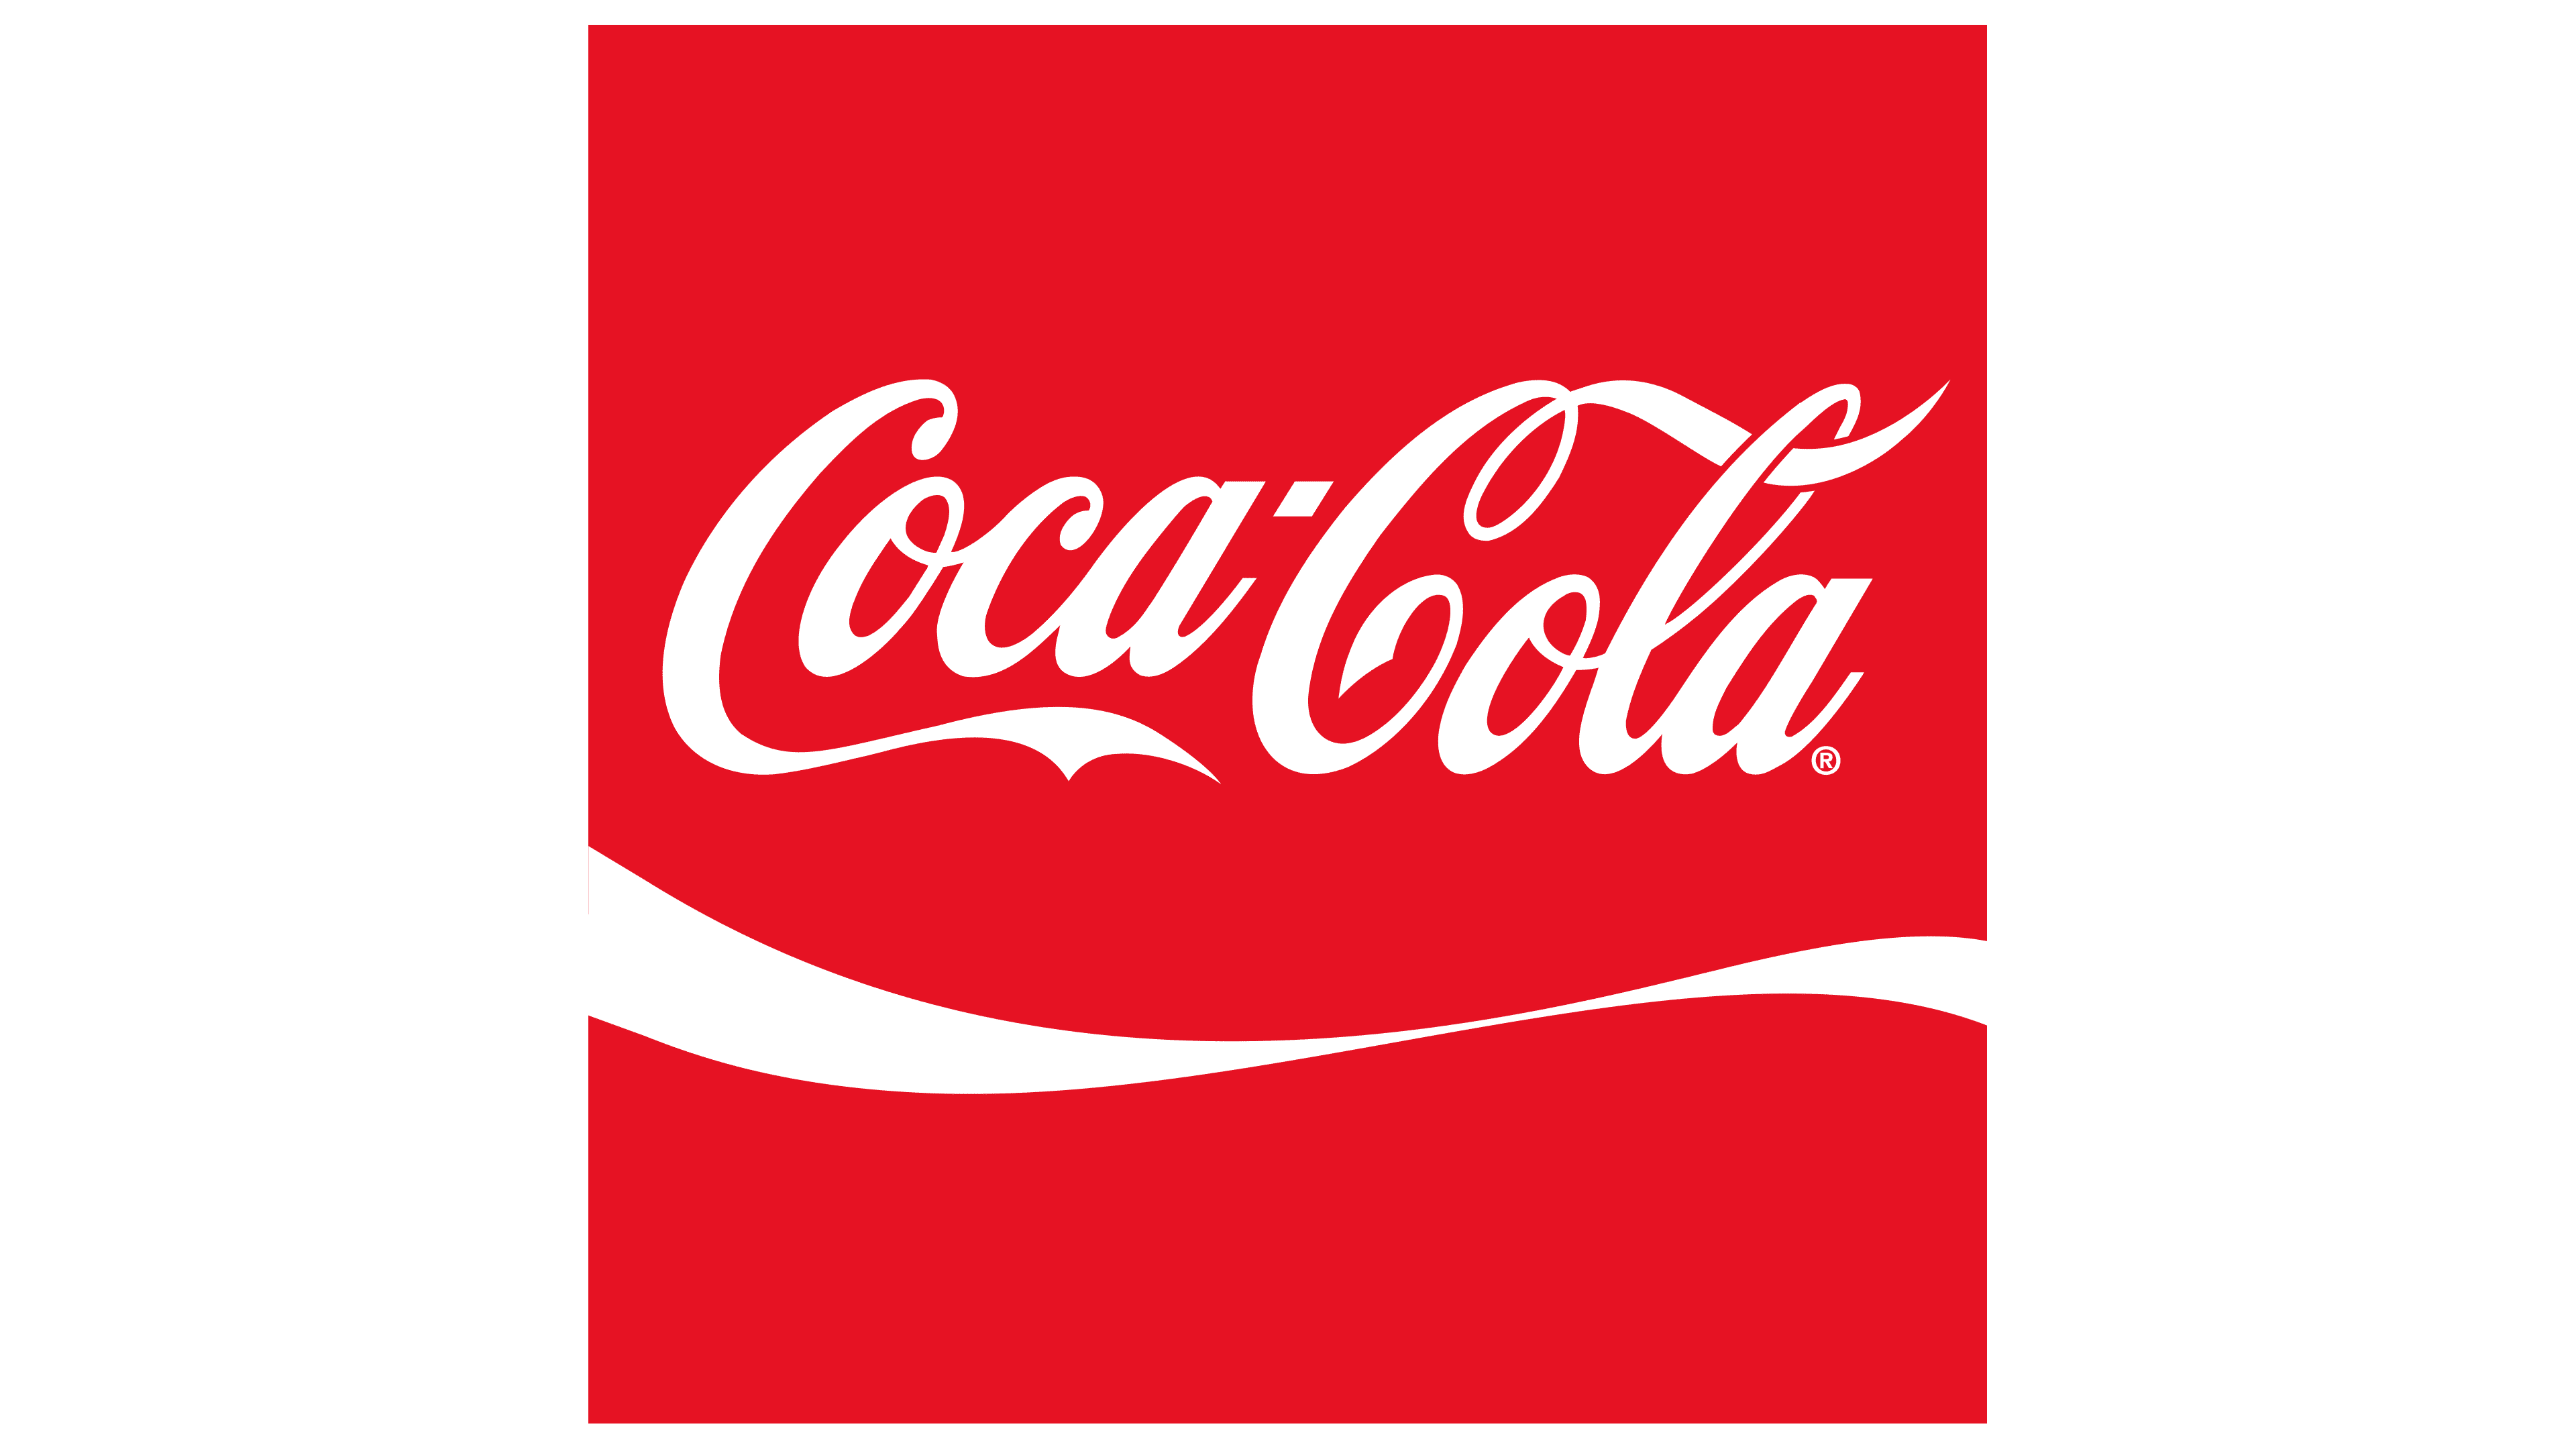 Coca Cola Logos